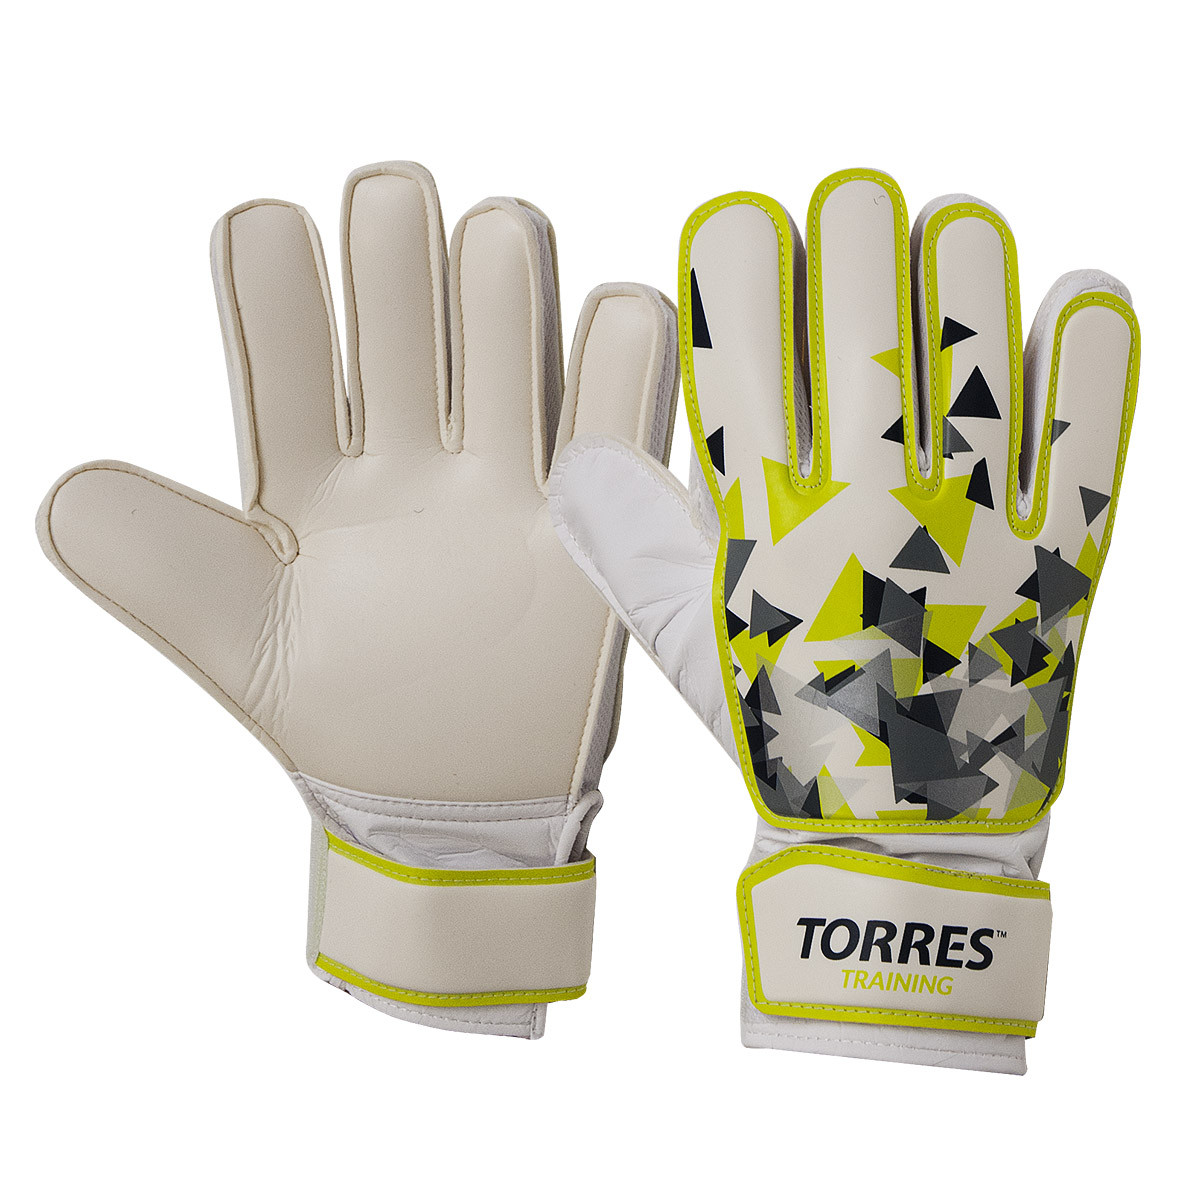 Перчатки вратарские Torres Training FG05214, р.10,2 мм латекс, удл.манж.,бело-зелено-серый 1200_1200